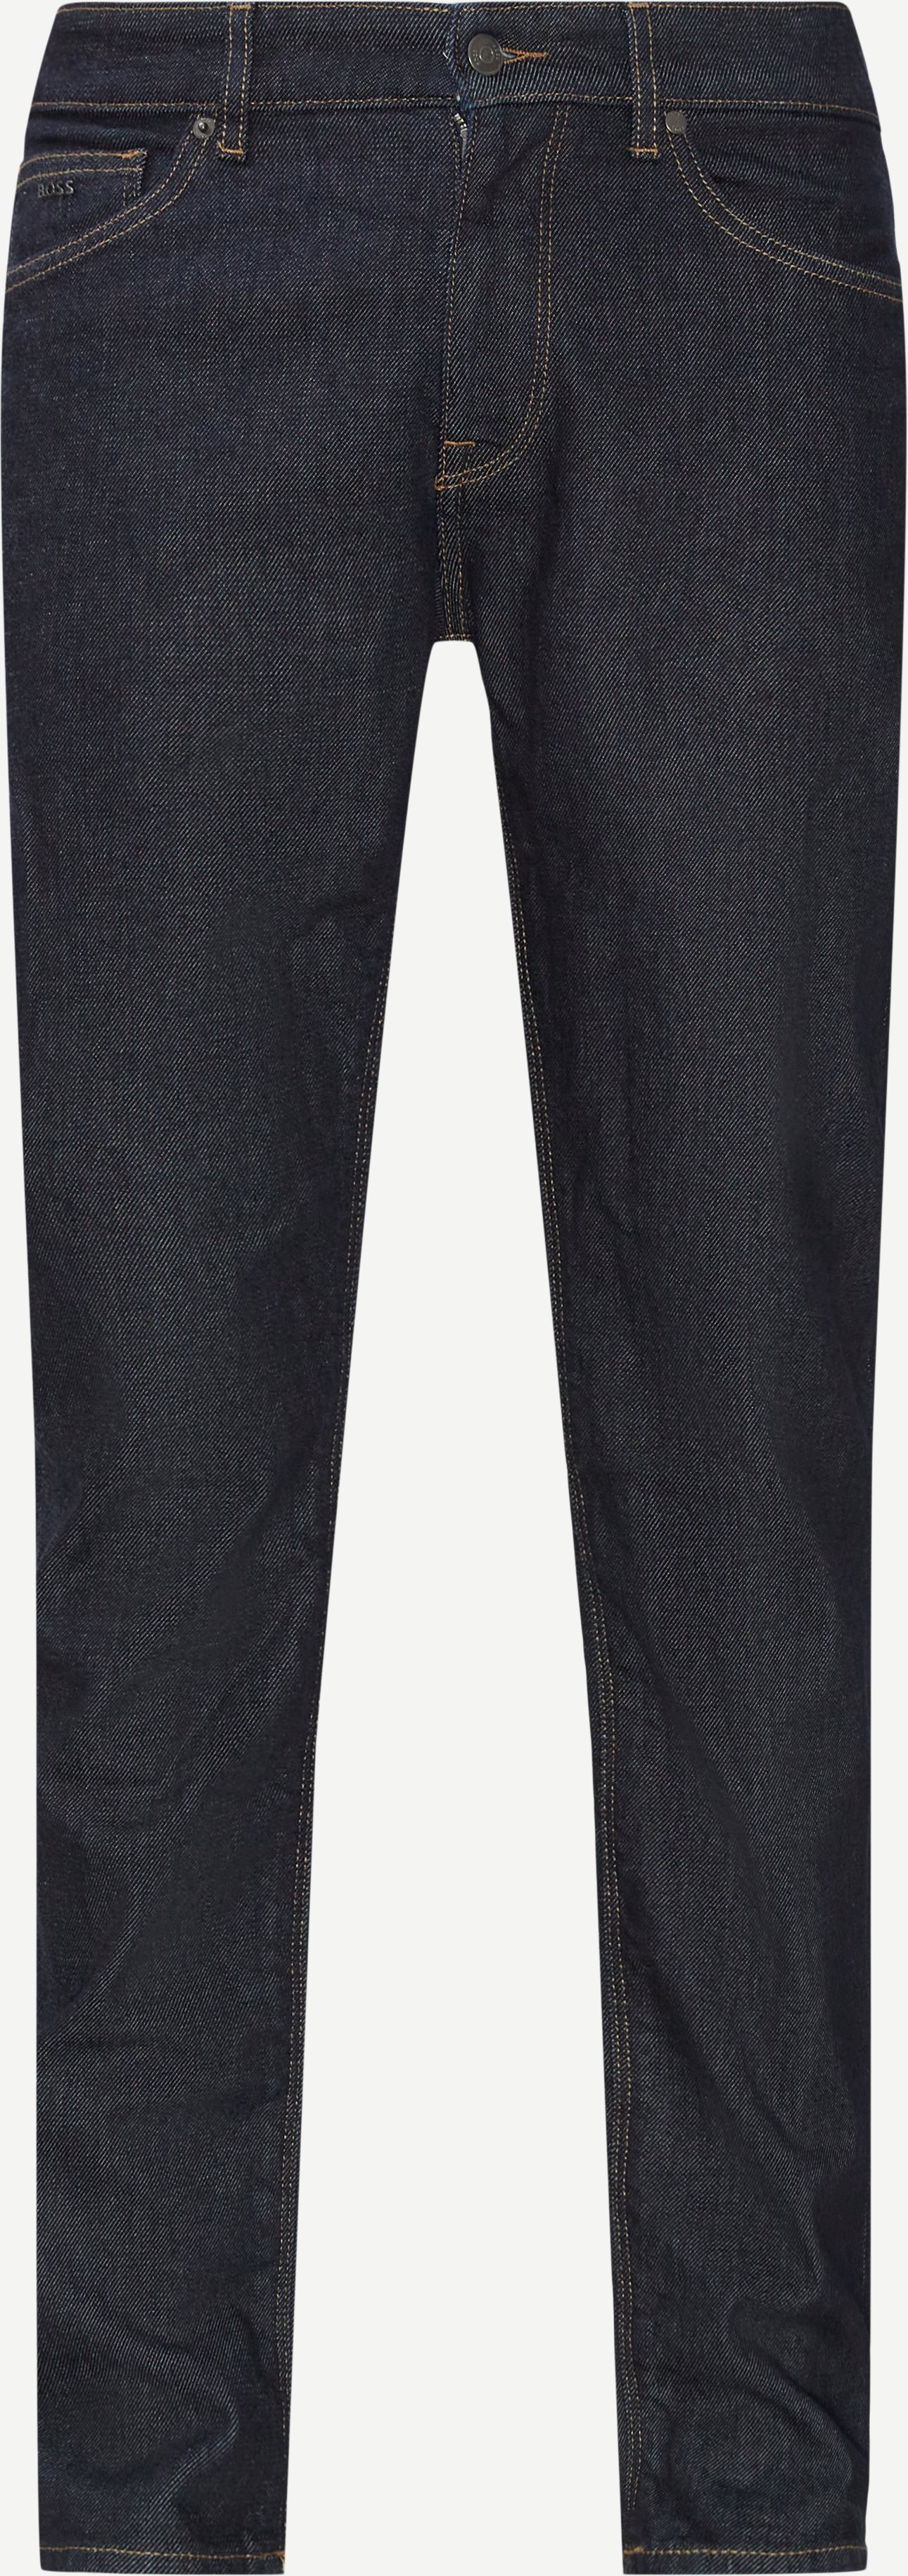 Maine3 Stretch Denim Jeans - Jeans - Regular fit - Denim